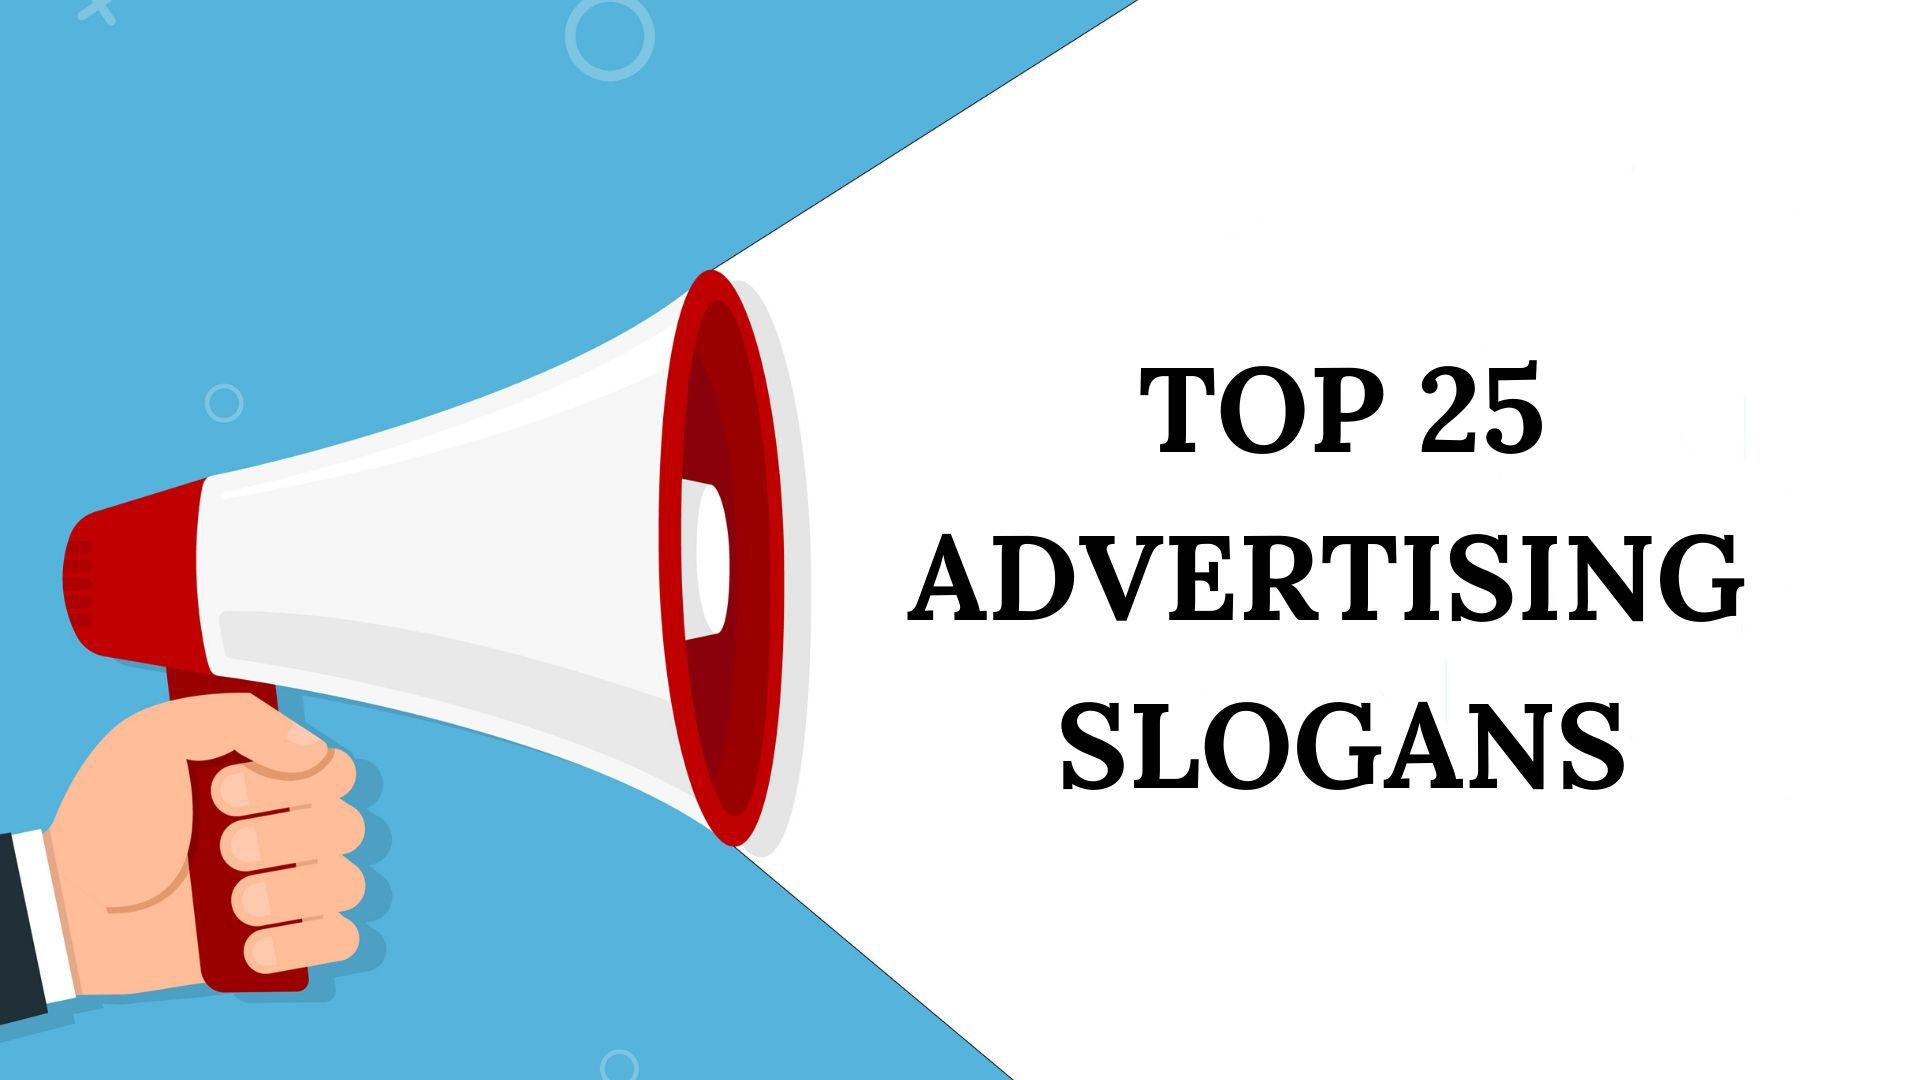 Top 25 Advertising Slogans & Brand | Marketing91